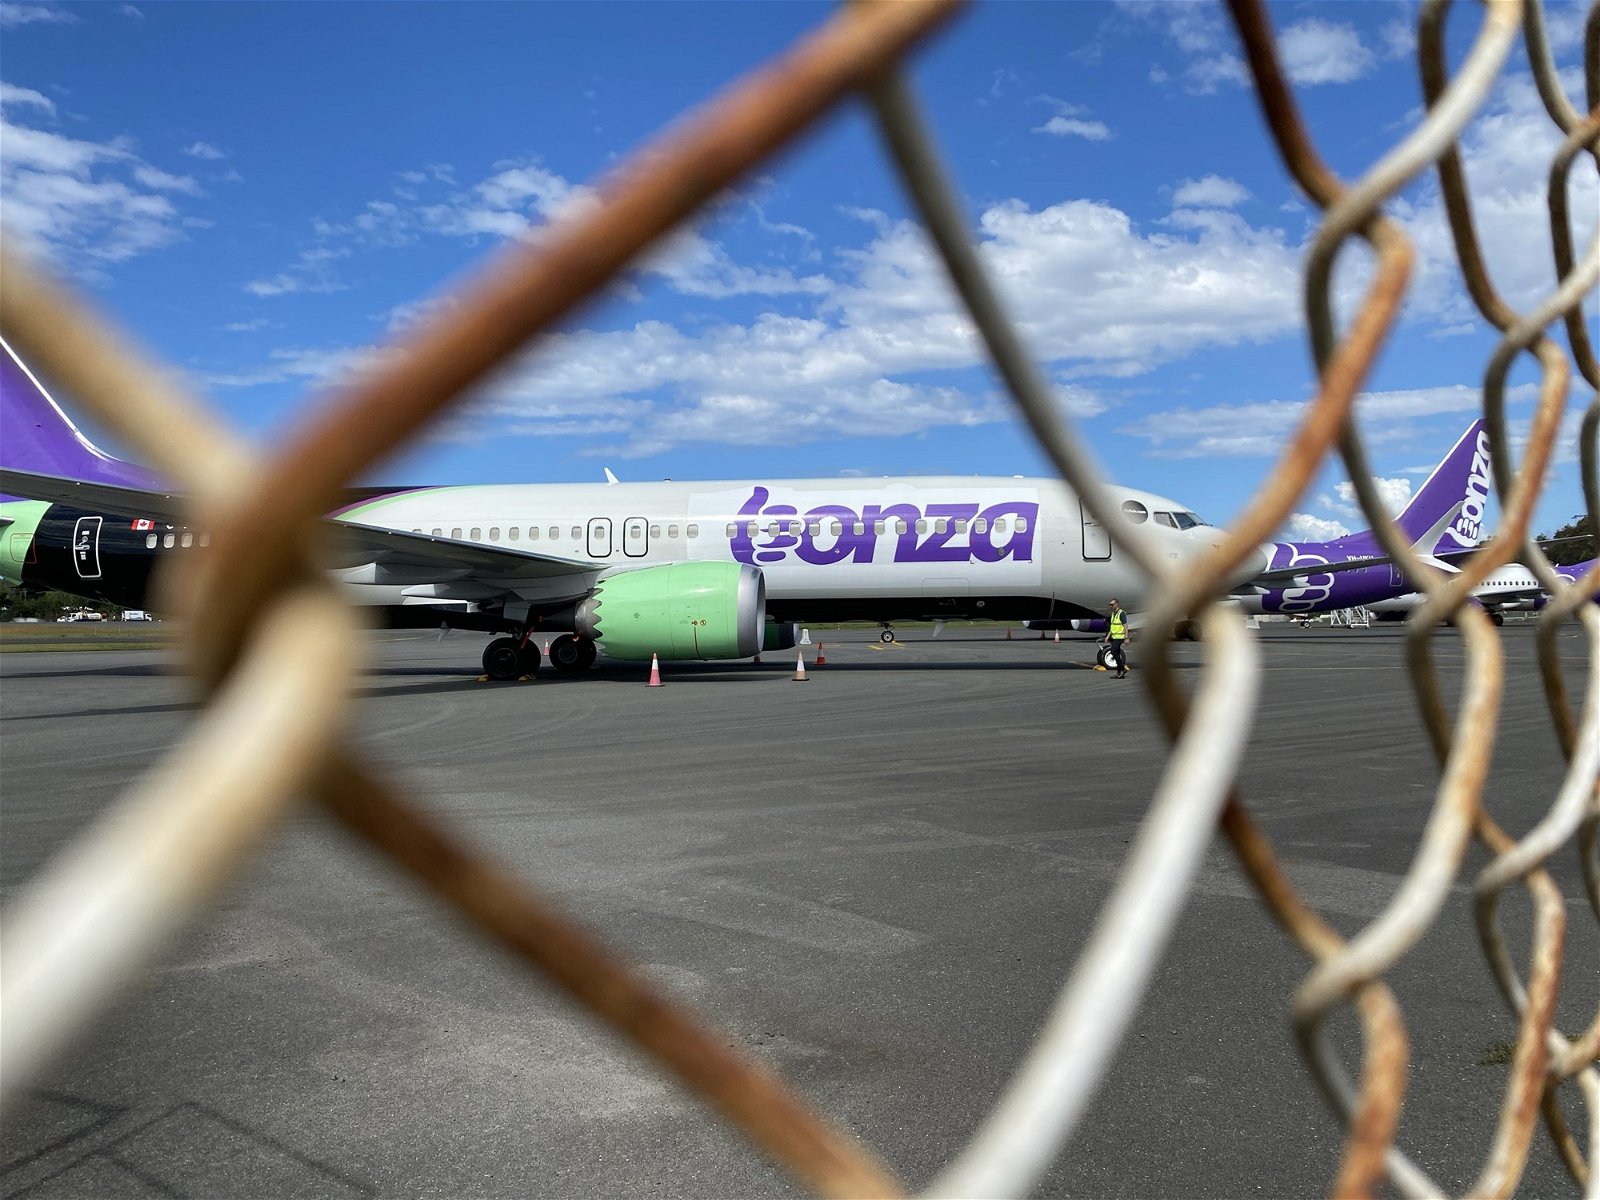 Image of Bonza airplane behind a gate.